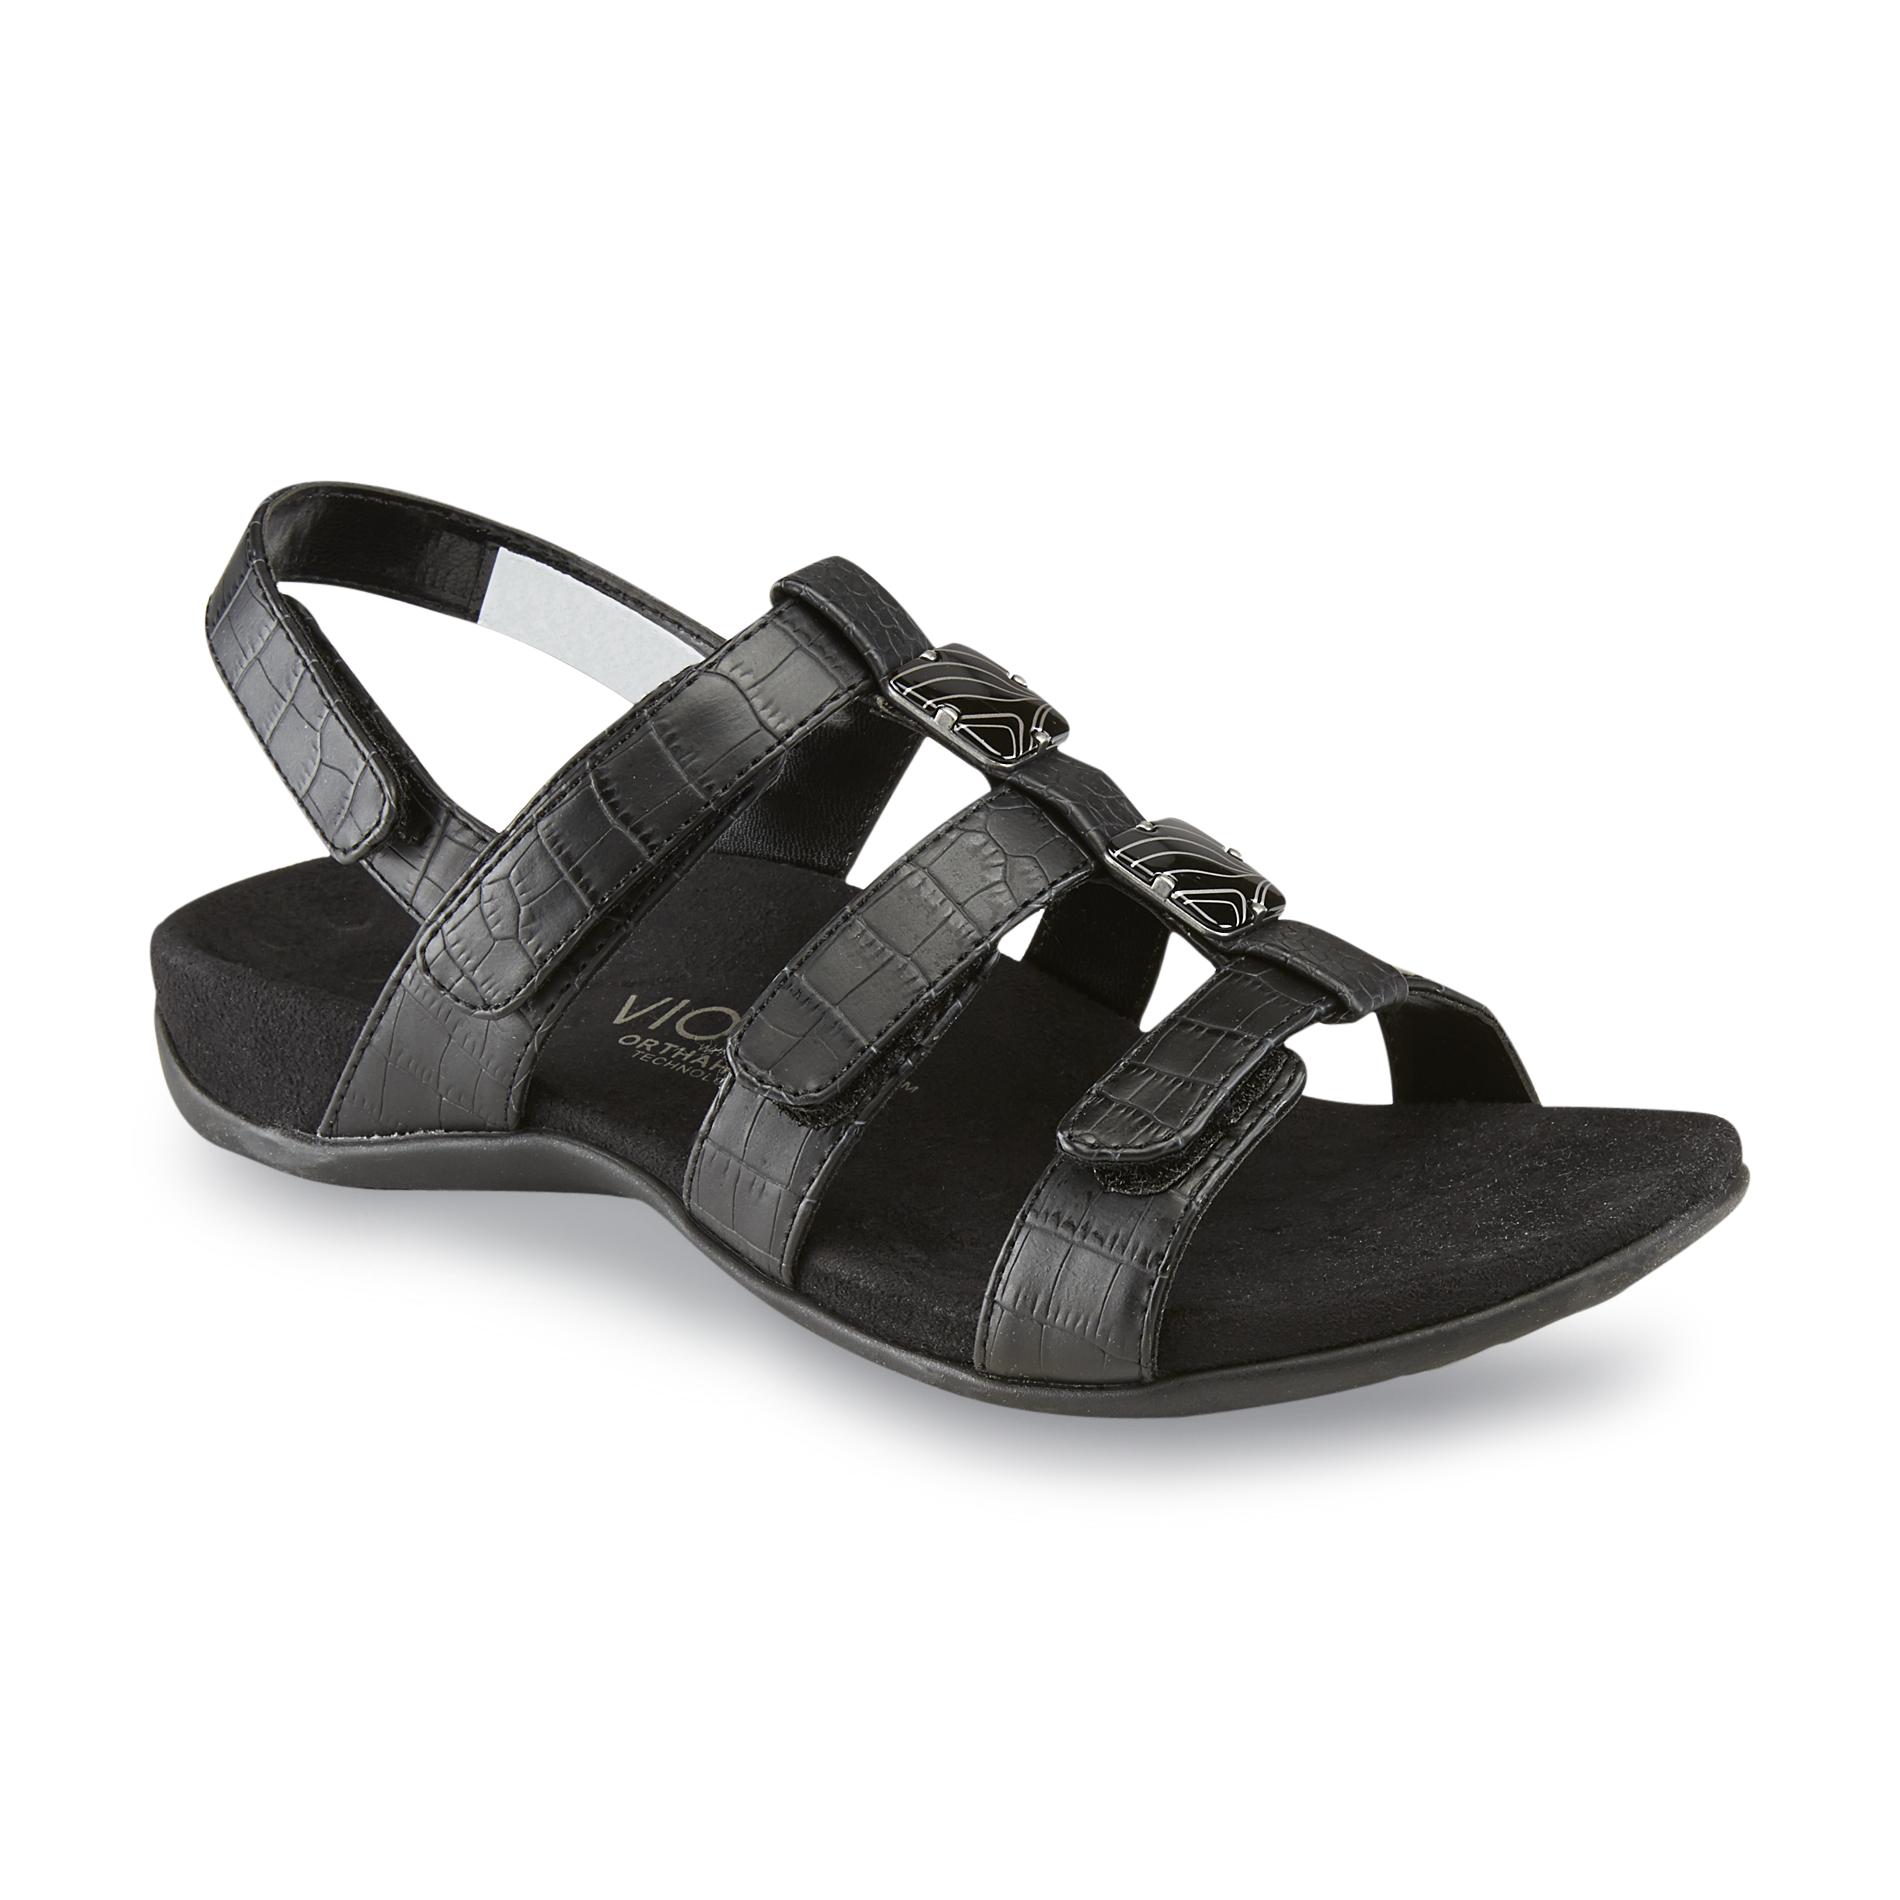 Vionic Women's Amber Black Ankle Strap Comfort Sandal - Wide Width